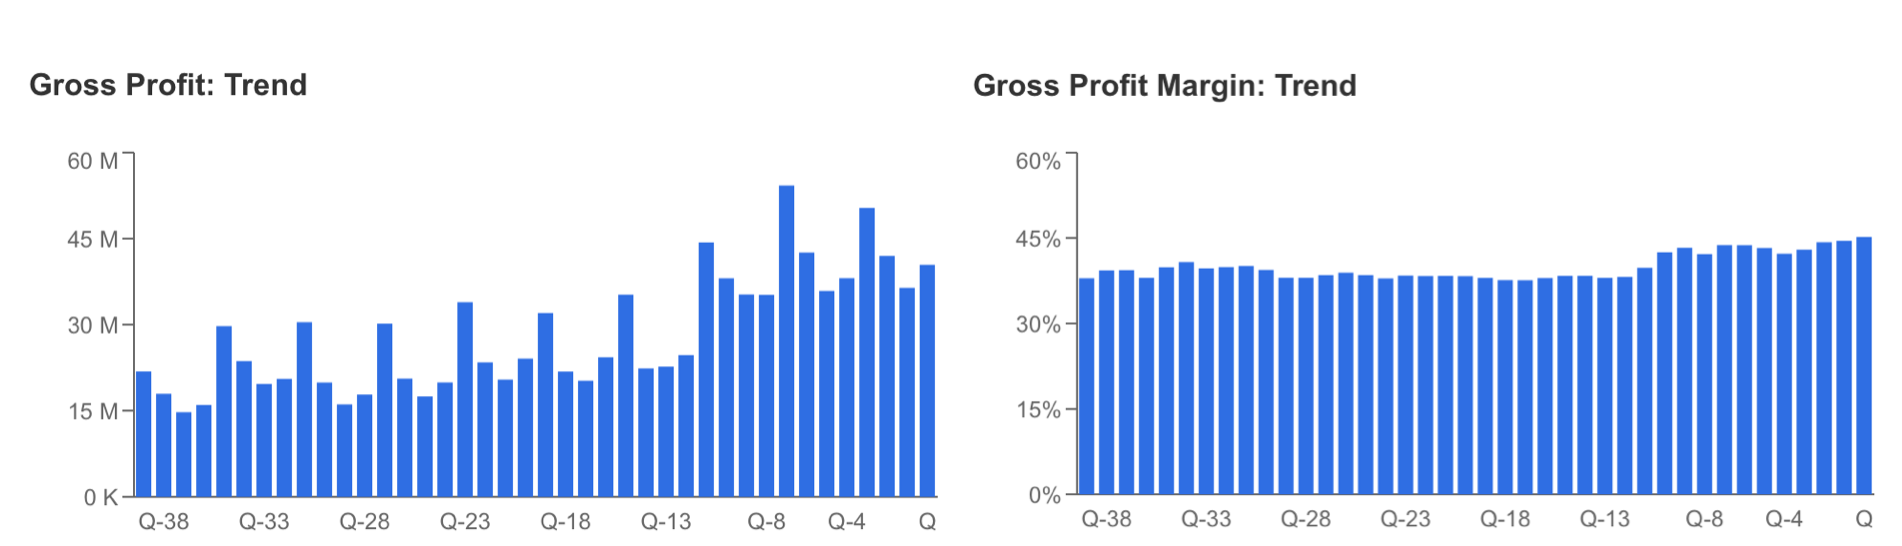 Gross Profits, Margins Trend